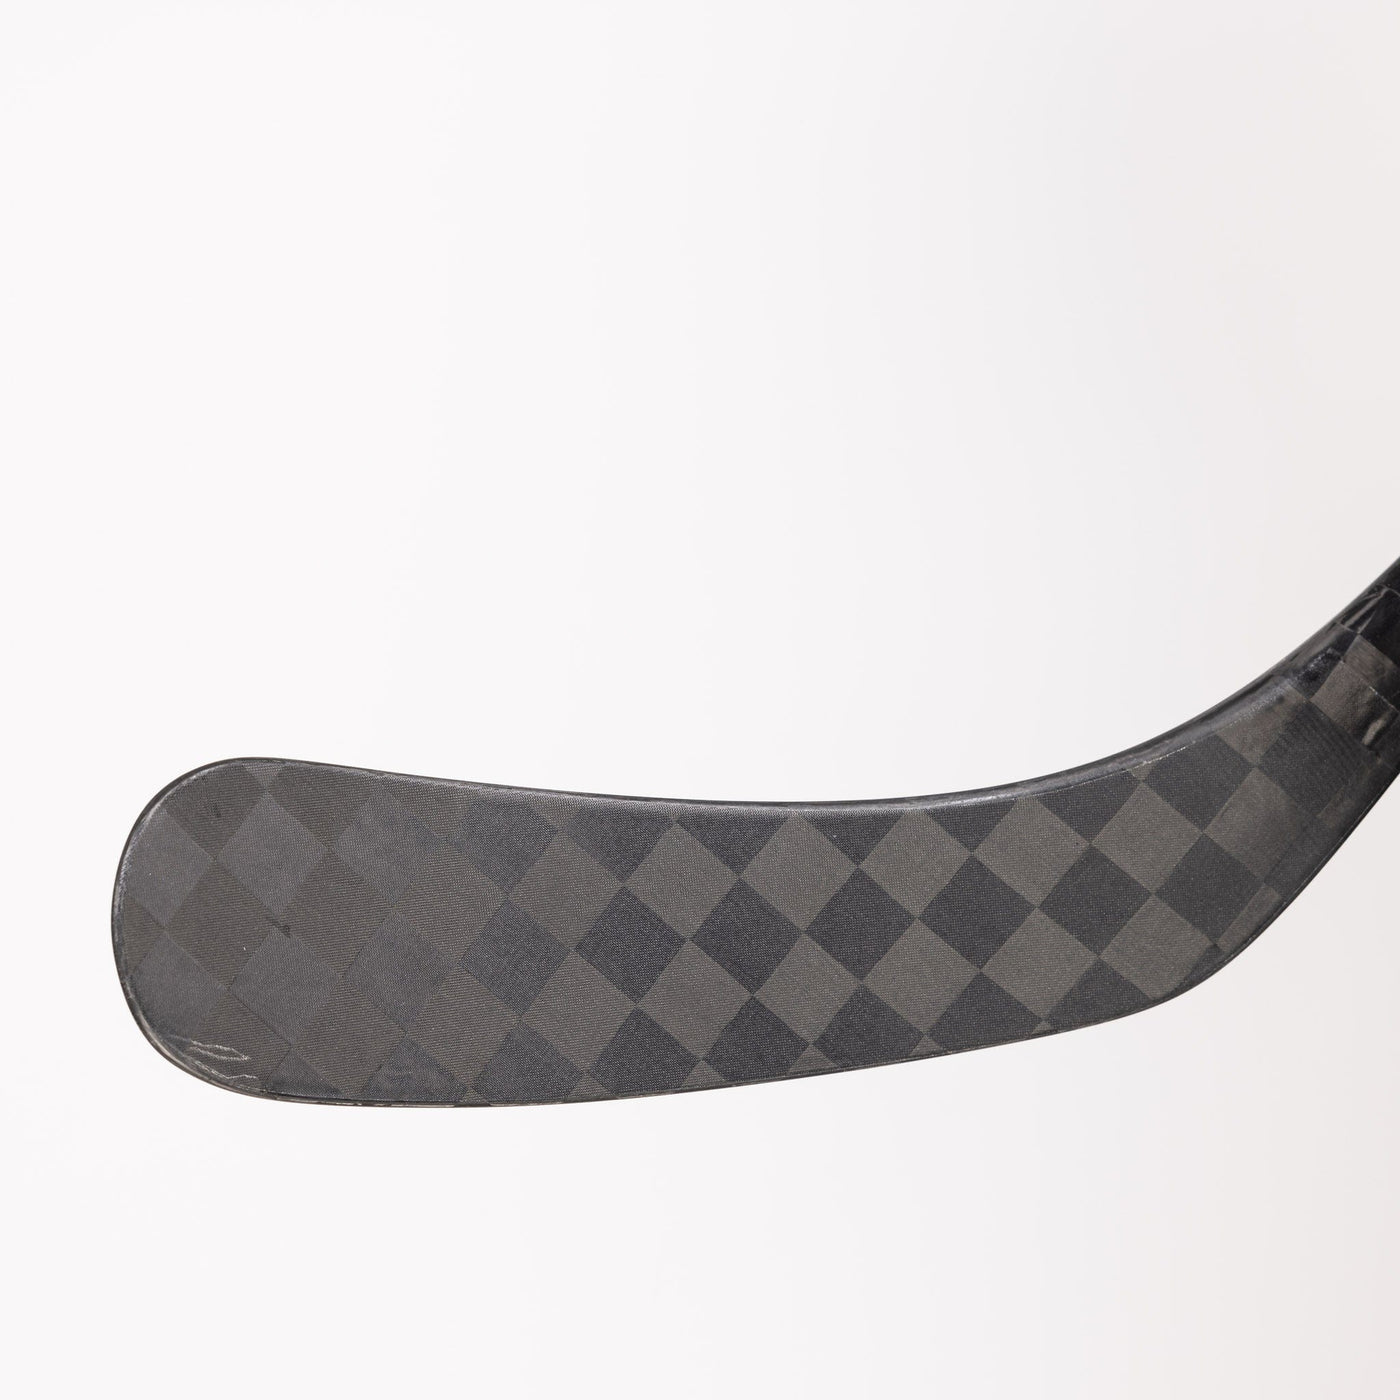 Bauer Vapor HyperLite2 Junior Hockey Stick - 40 Flex - The Hockey Shop Source For Sports